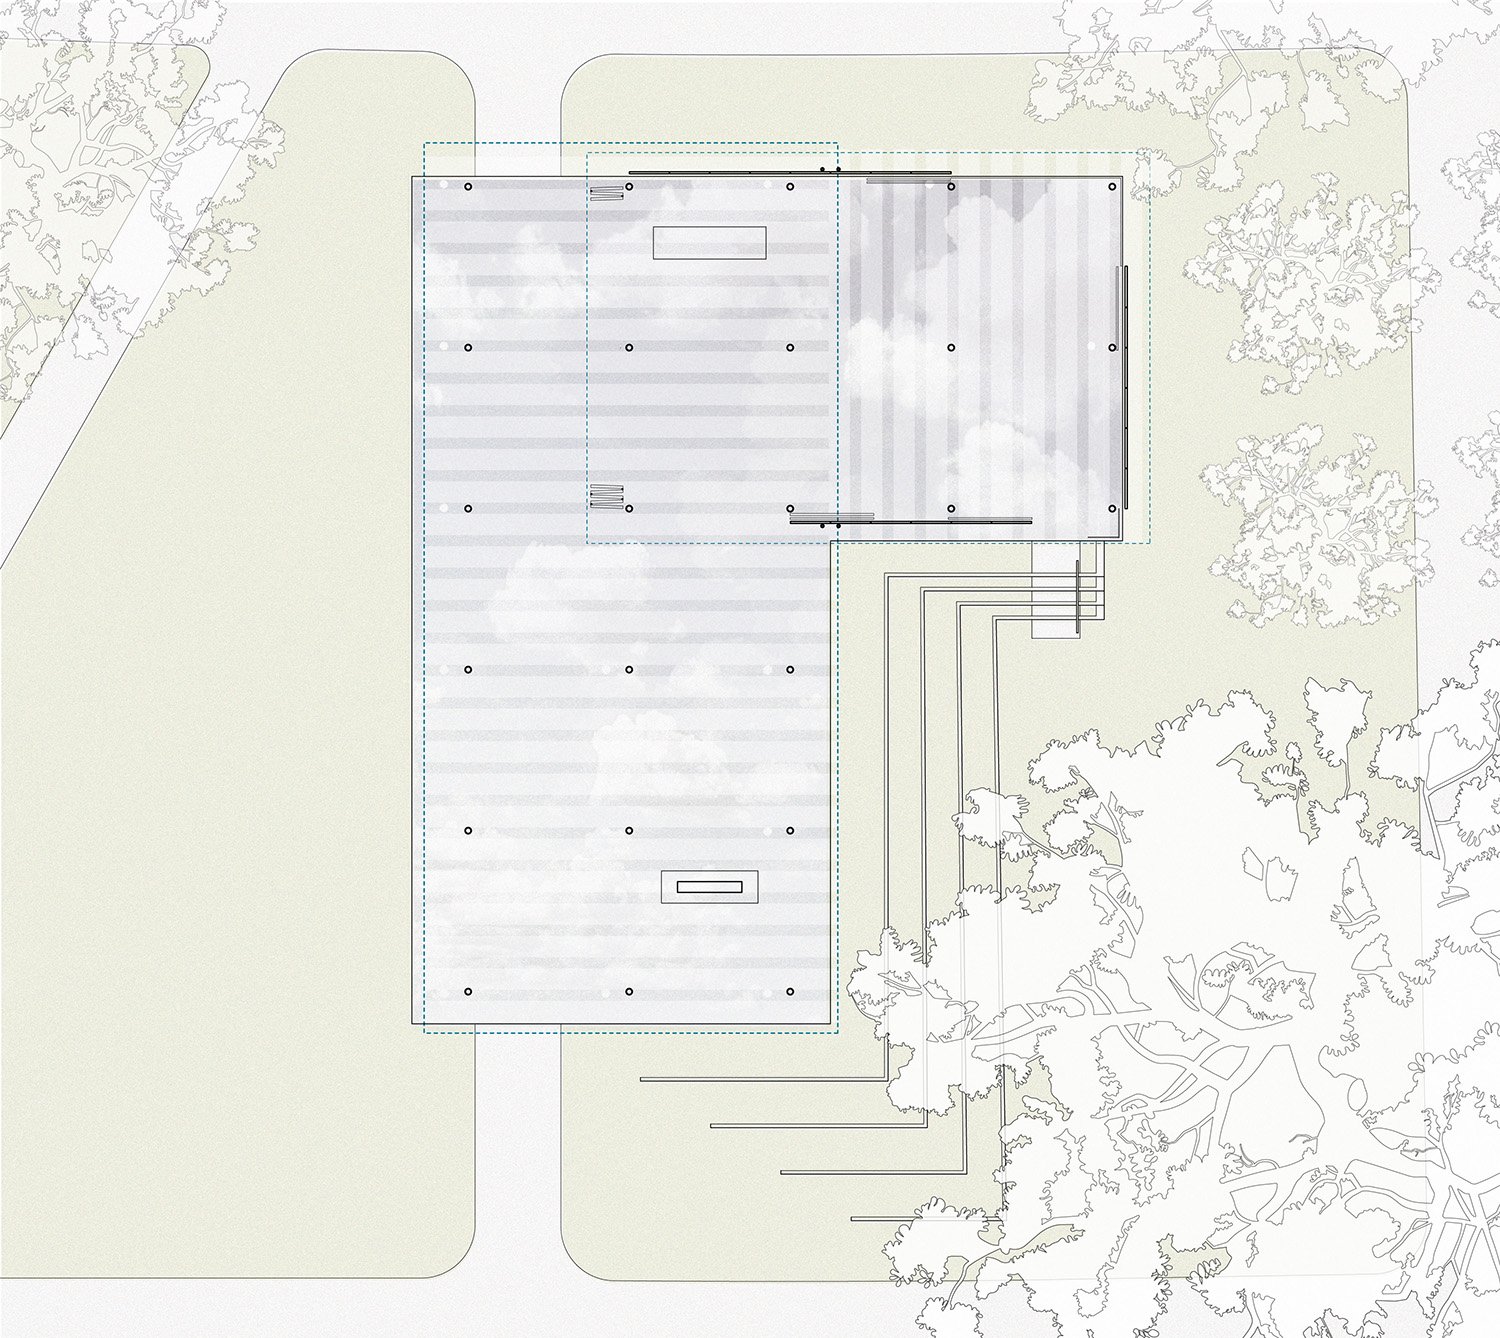 Pavilion plan with open operable walls | JCDA